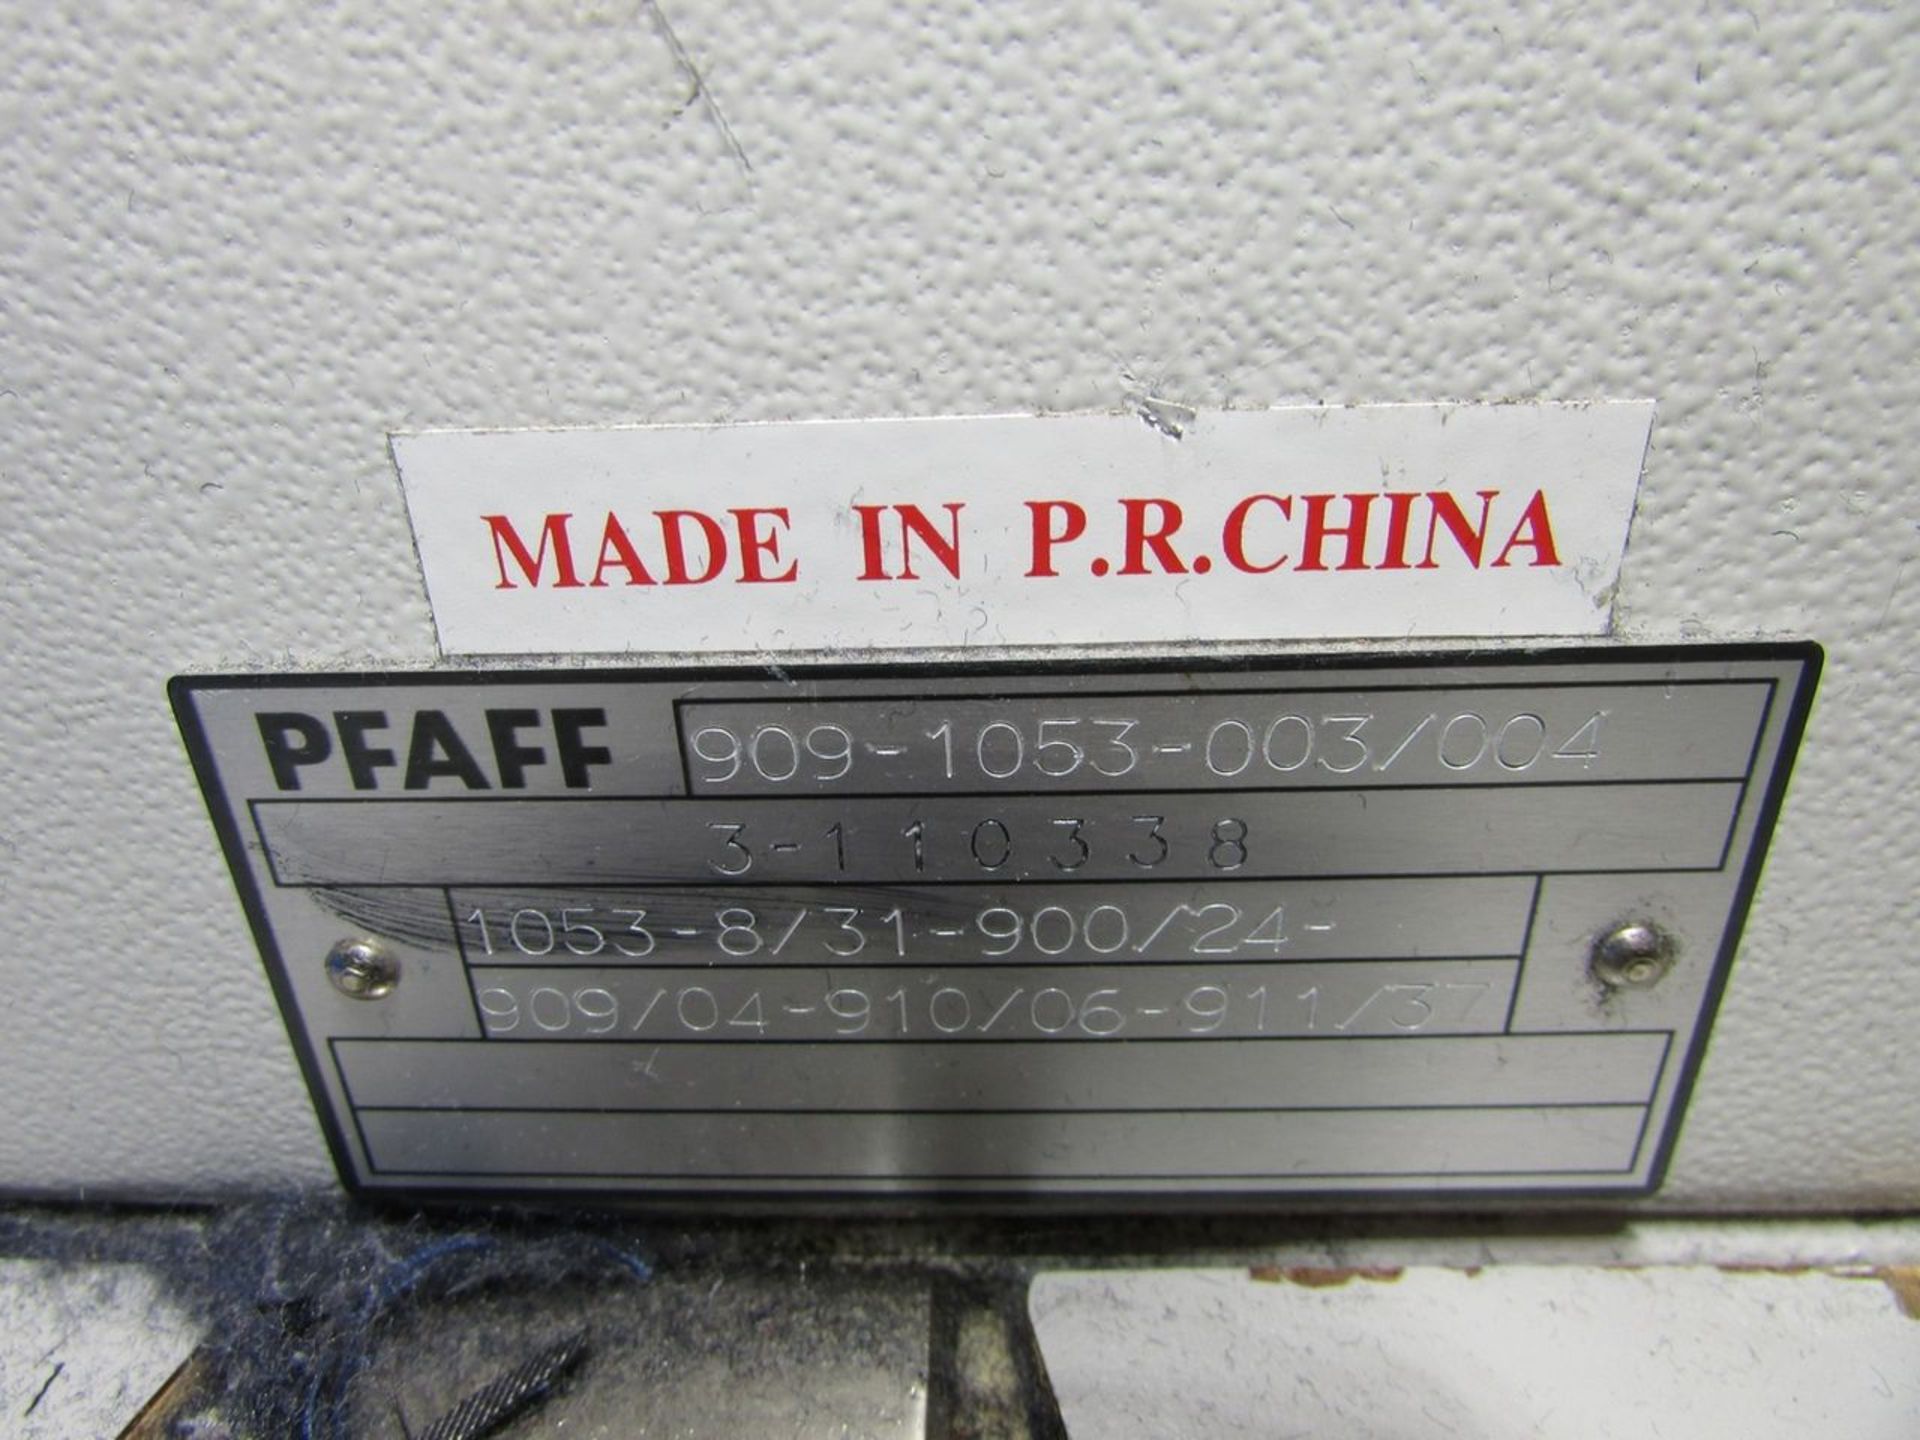 Pfaff Model 1053-8/31-900/24 (S/N: 3-110338) Single Needle Lockstitch Sewing Machine, Trimmer, - Image 10 of 10